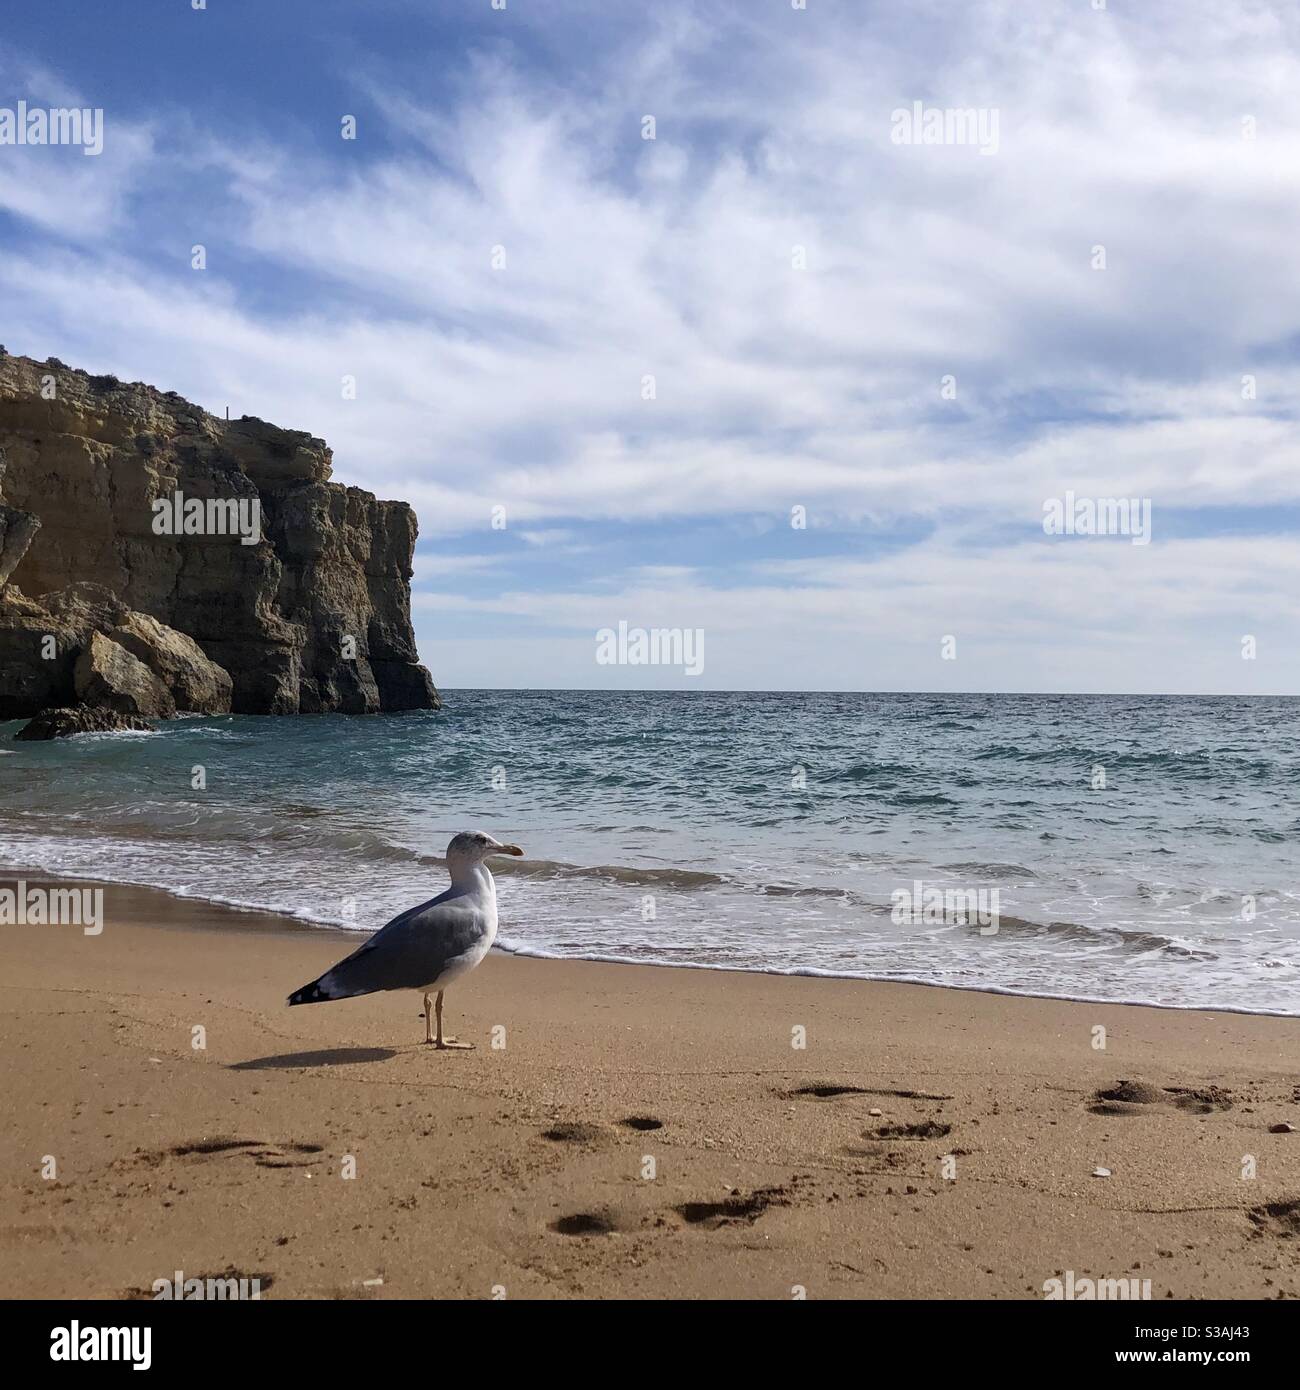 A seagull feeling the beach Stock Photo